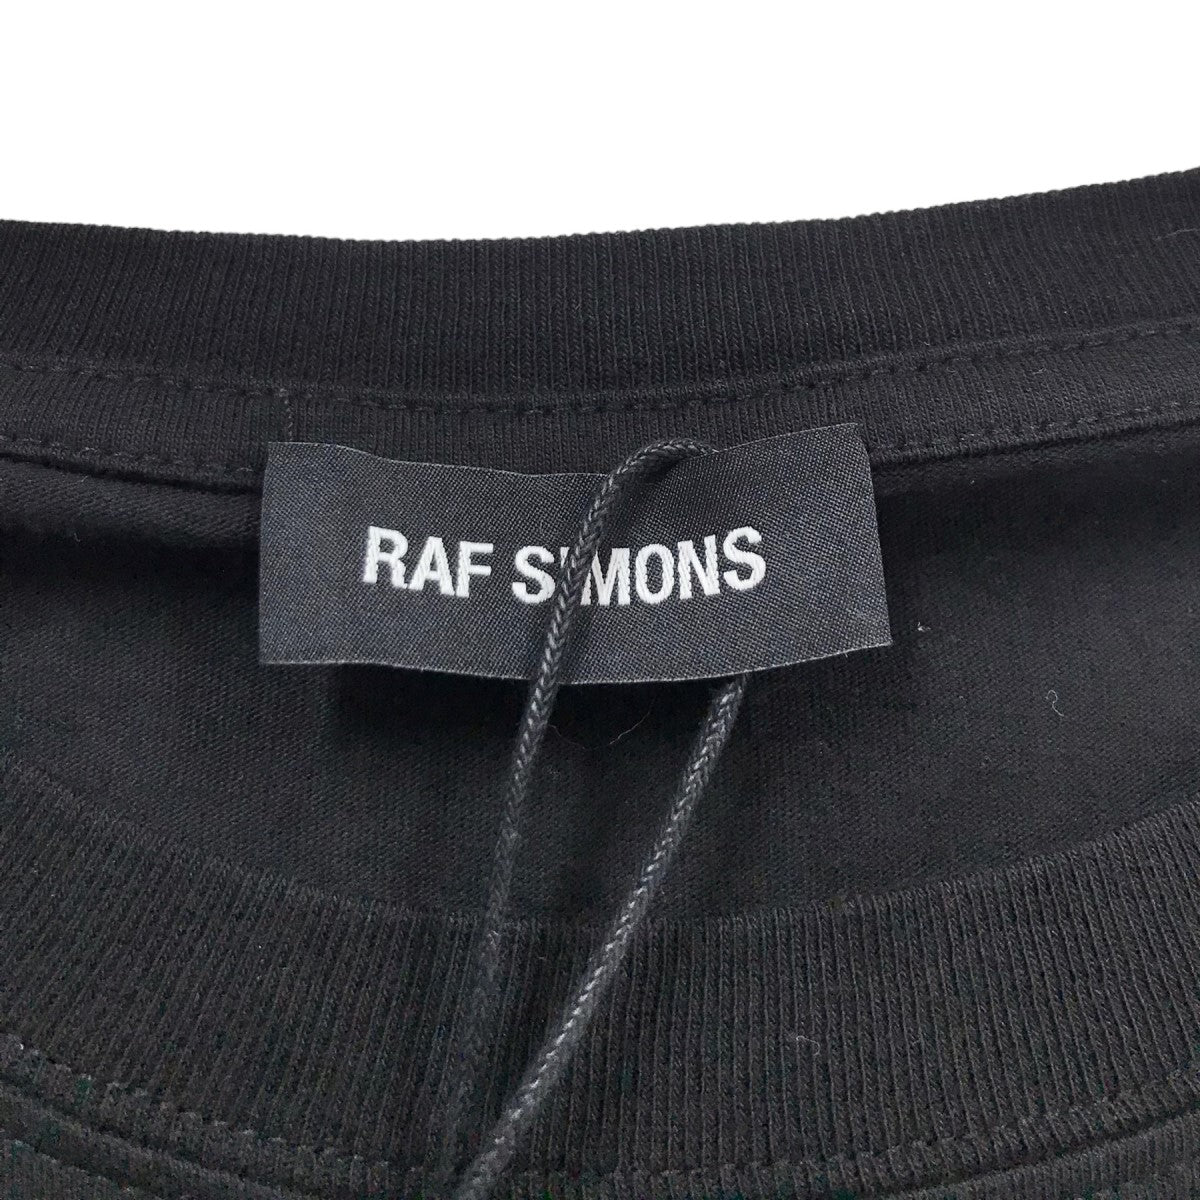 RAF SIMONS(ラフシモンズ) 19AW「Slim fit T-Shirt Raf Simons Antwerp 